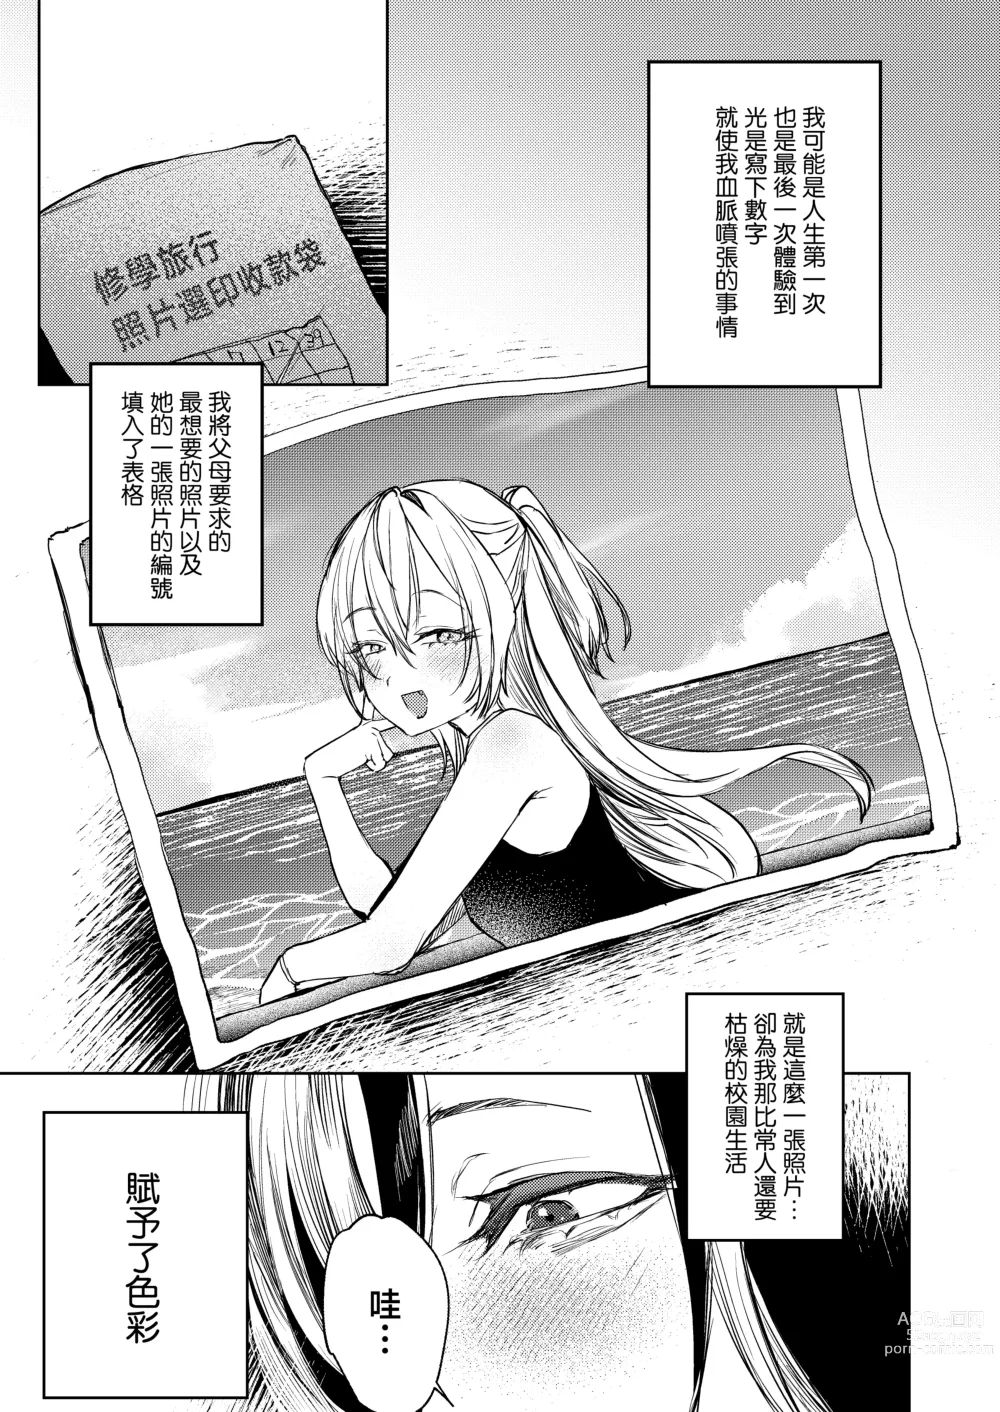 Page 5 of doujinshi 即便如此我也很爱你